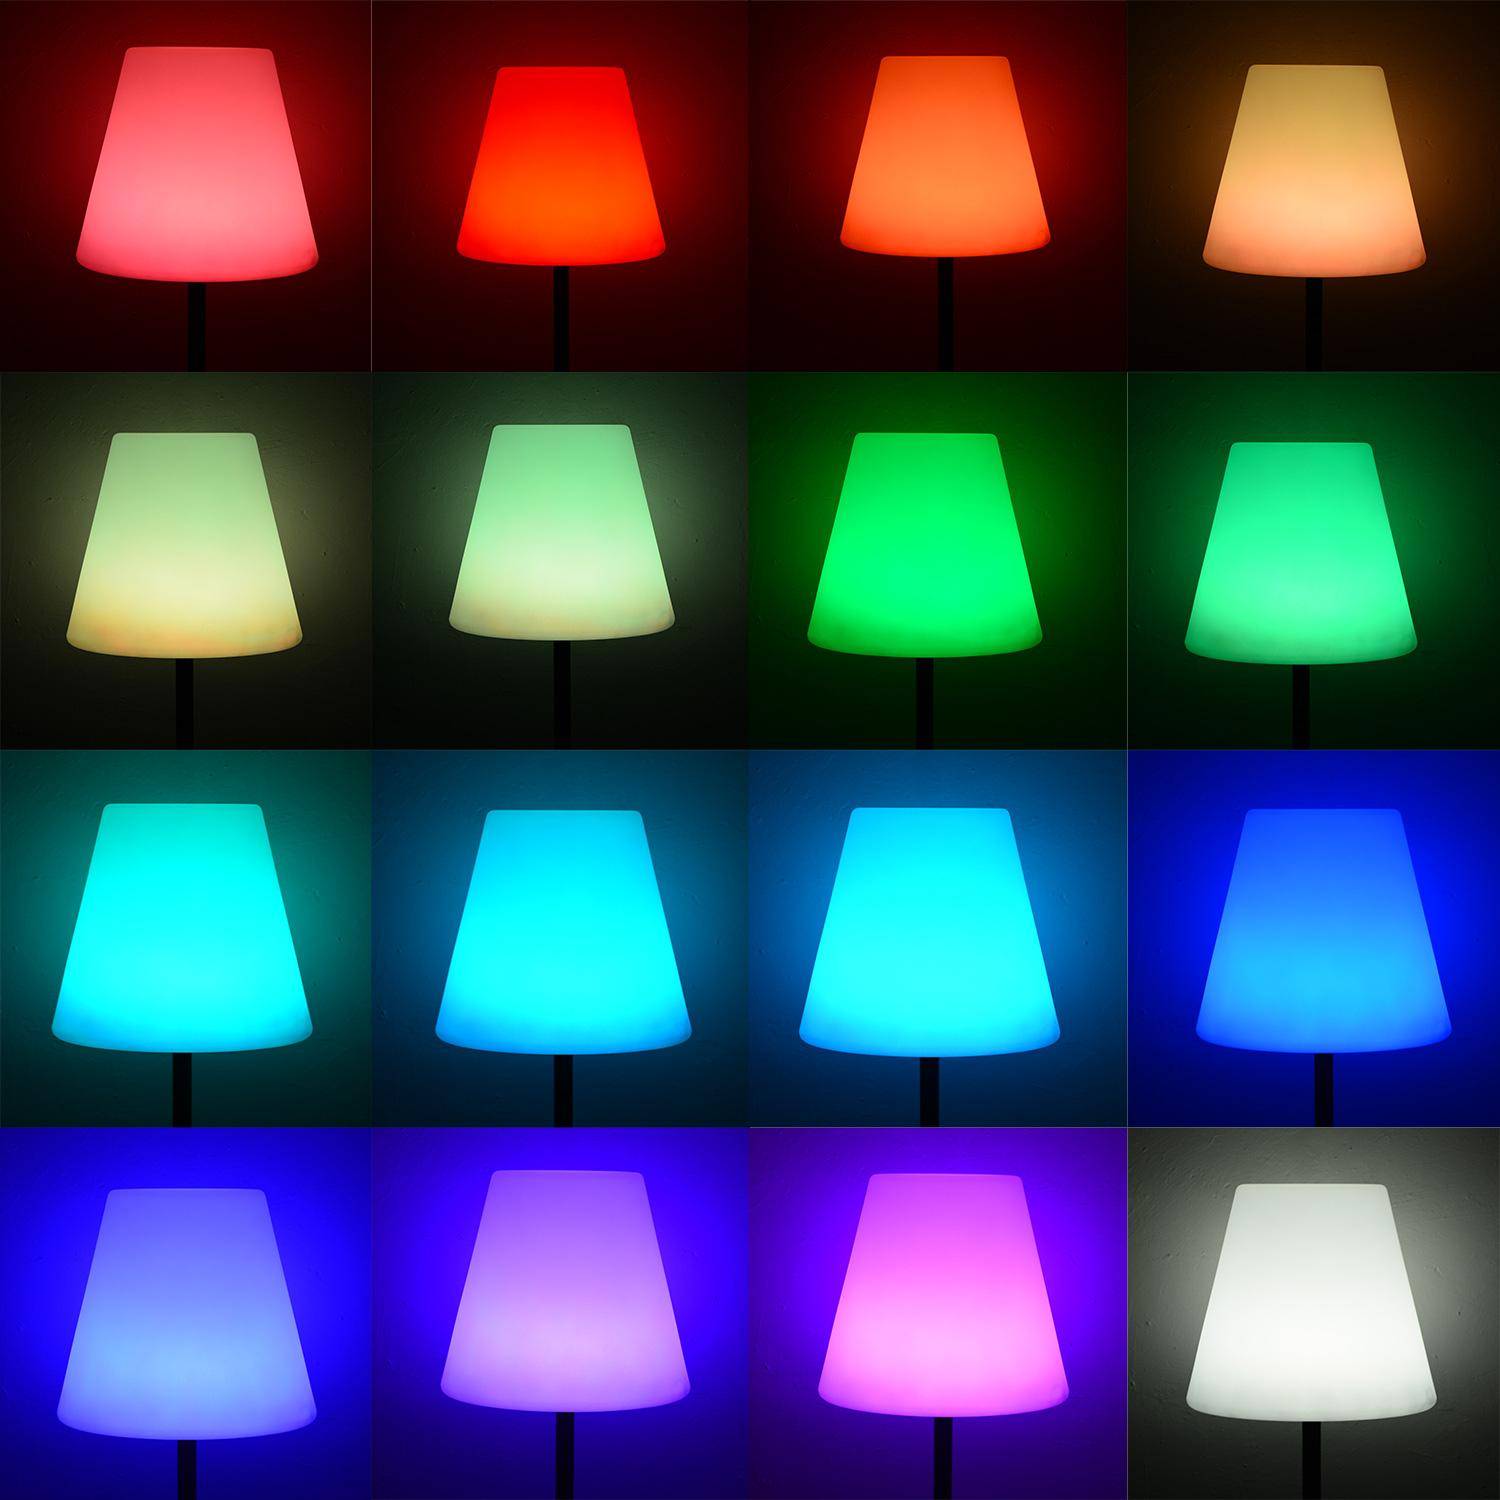 Staande lamp voor buiten 100 cm LAMPADA L LED hybride, multicolor staande lamp, design op batterij, zonne-energie, afstandsbediening Photo5